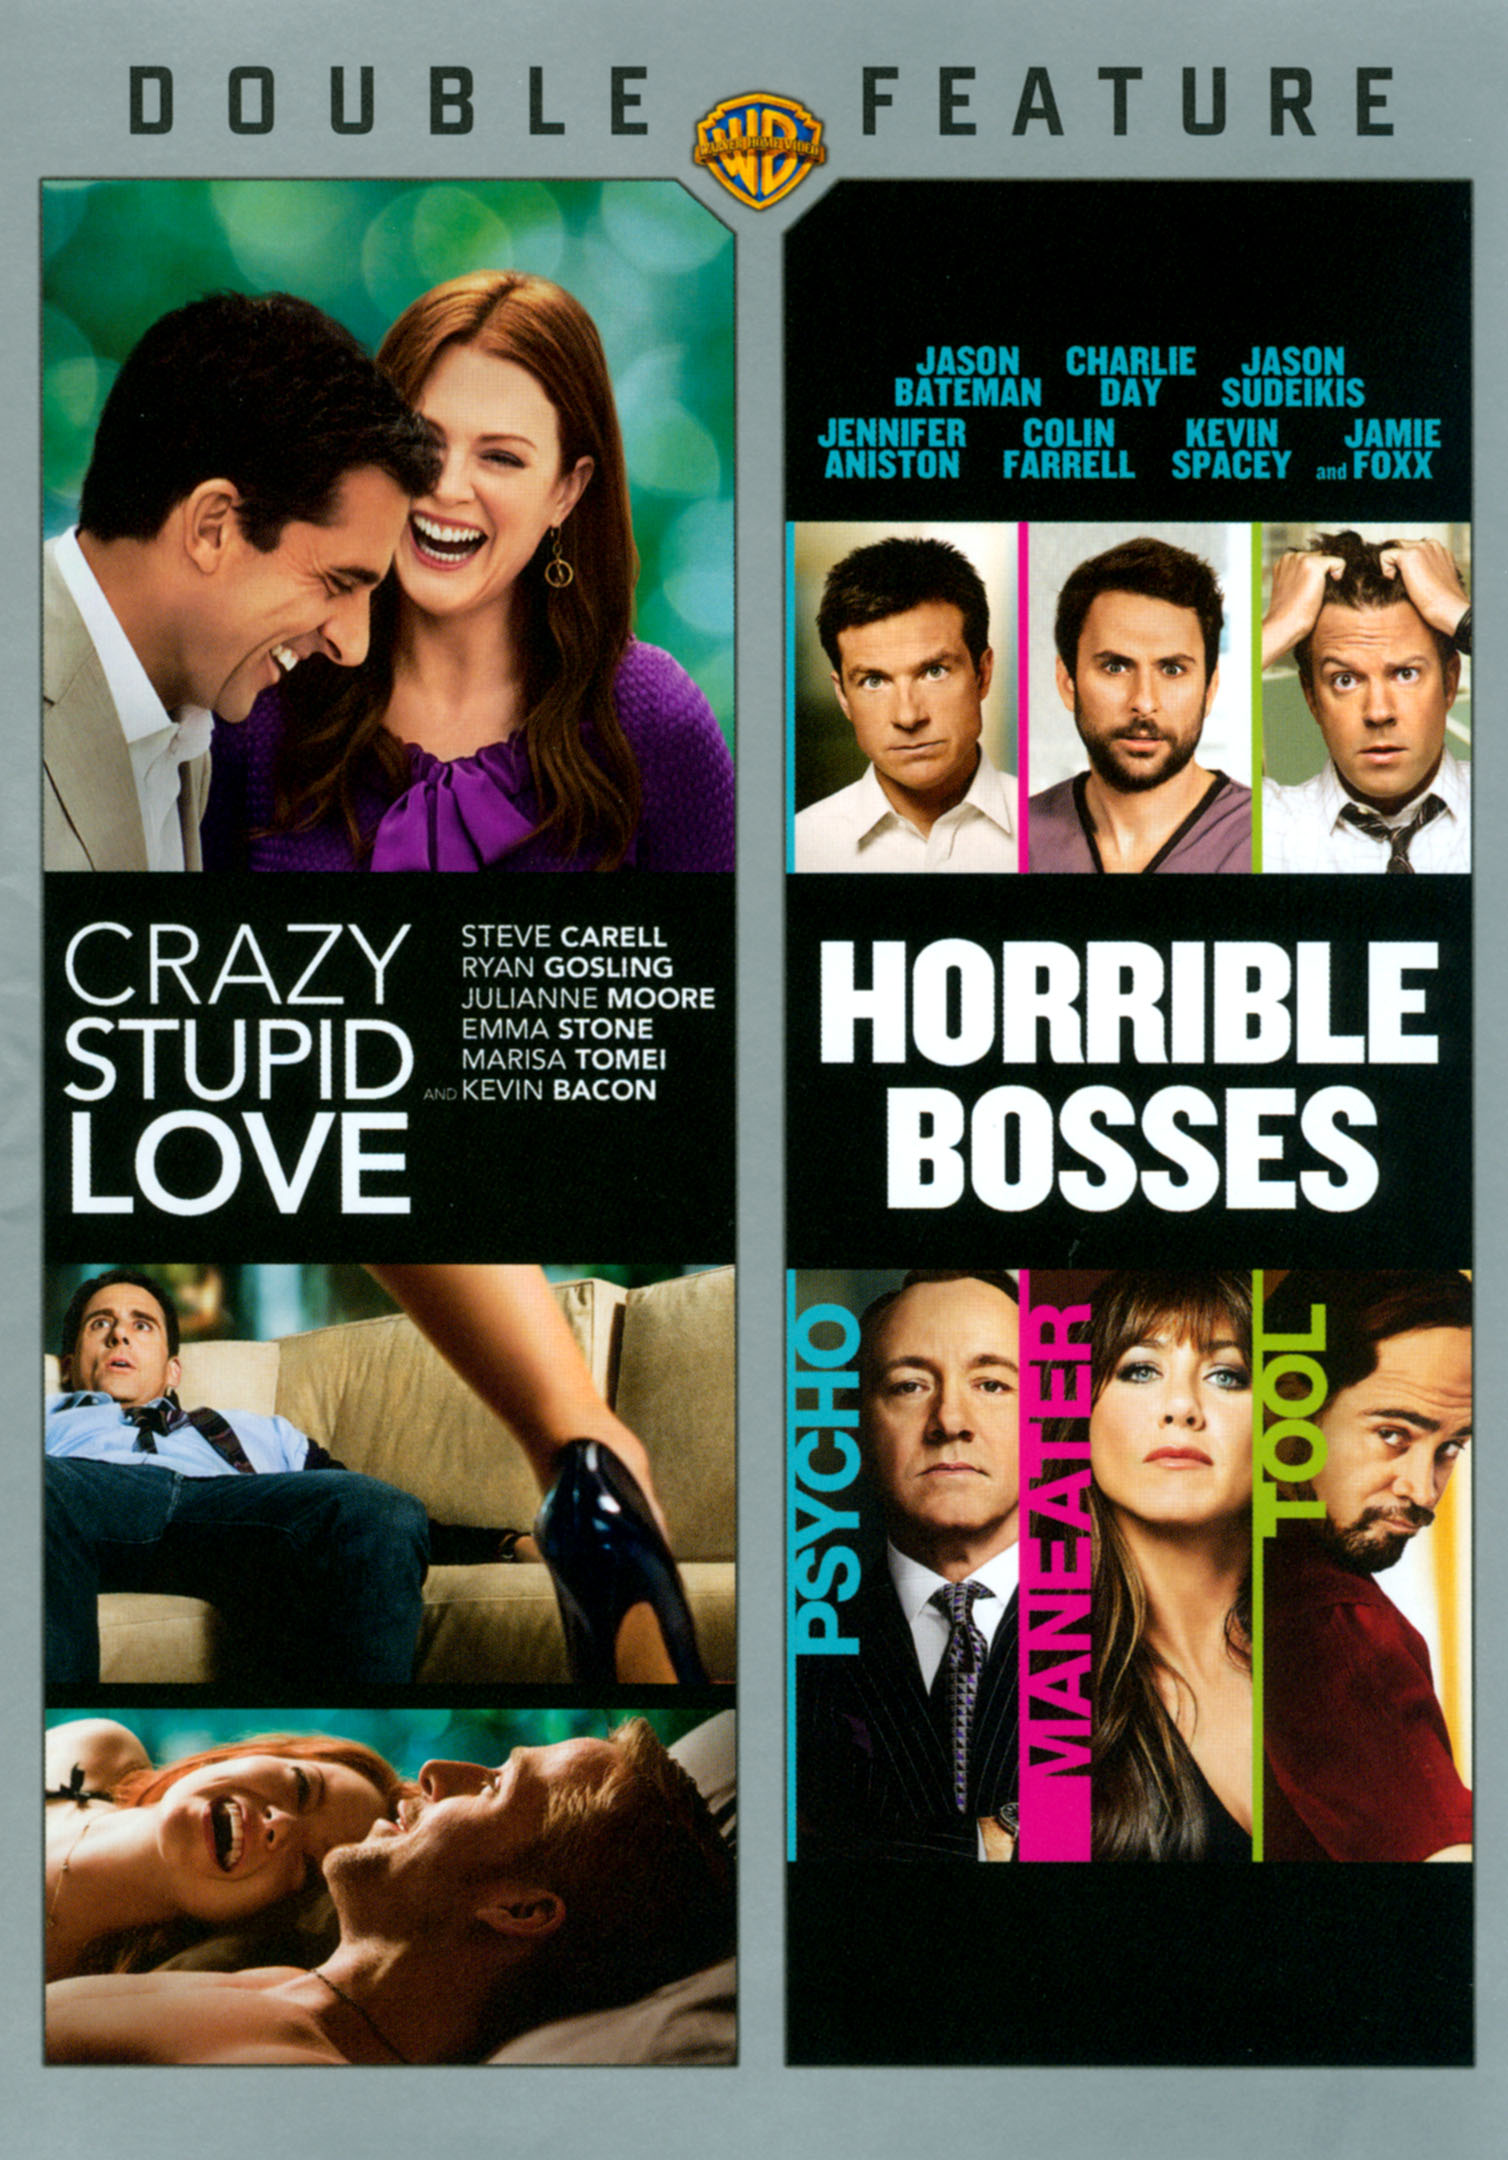 Crazy, Stupid, Love - Movies on Google Play